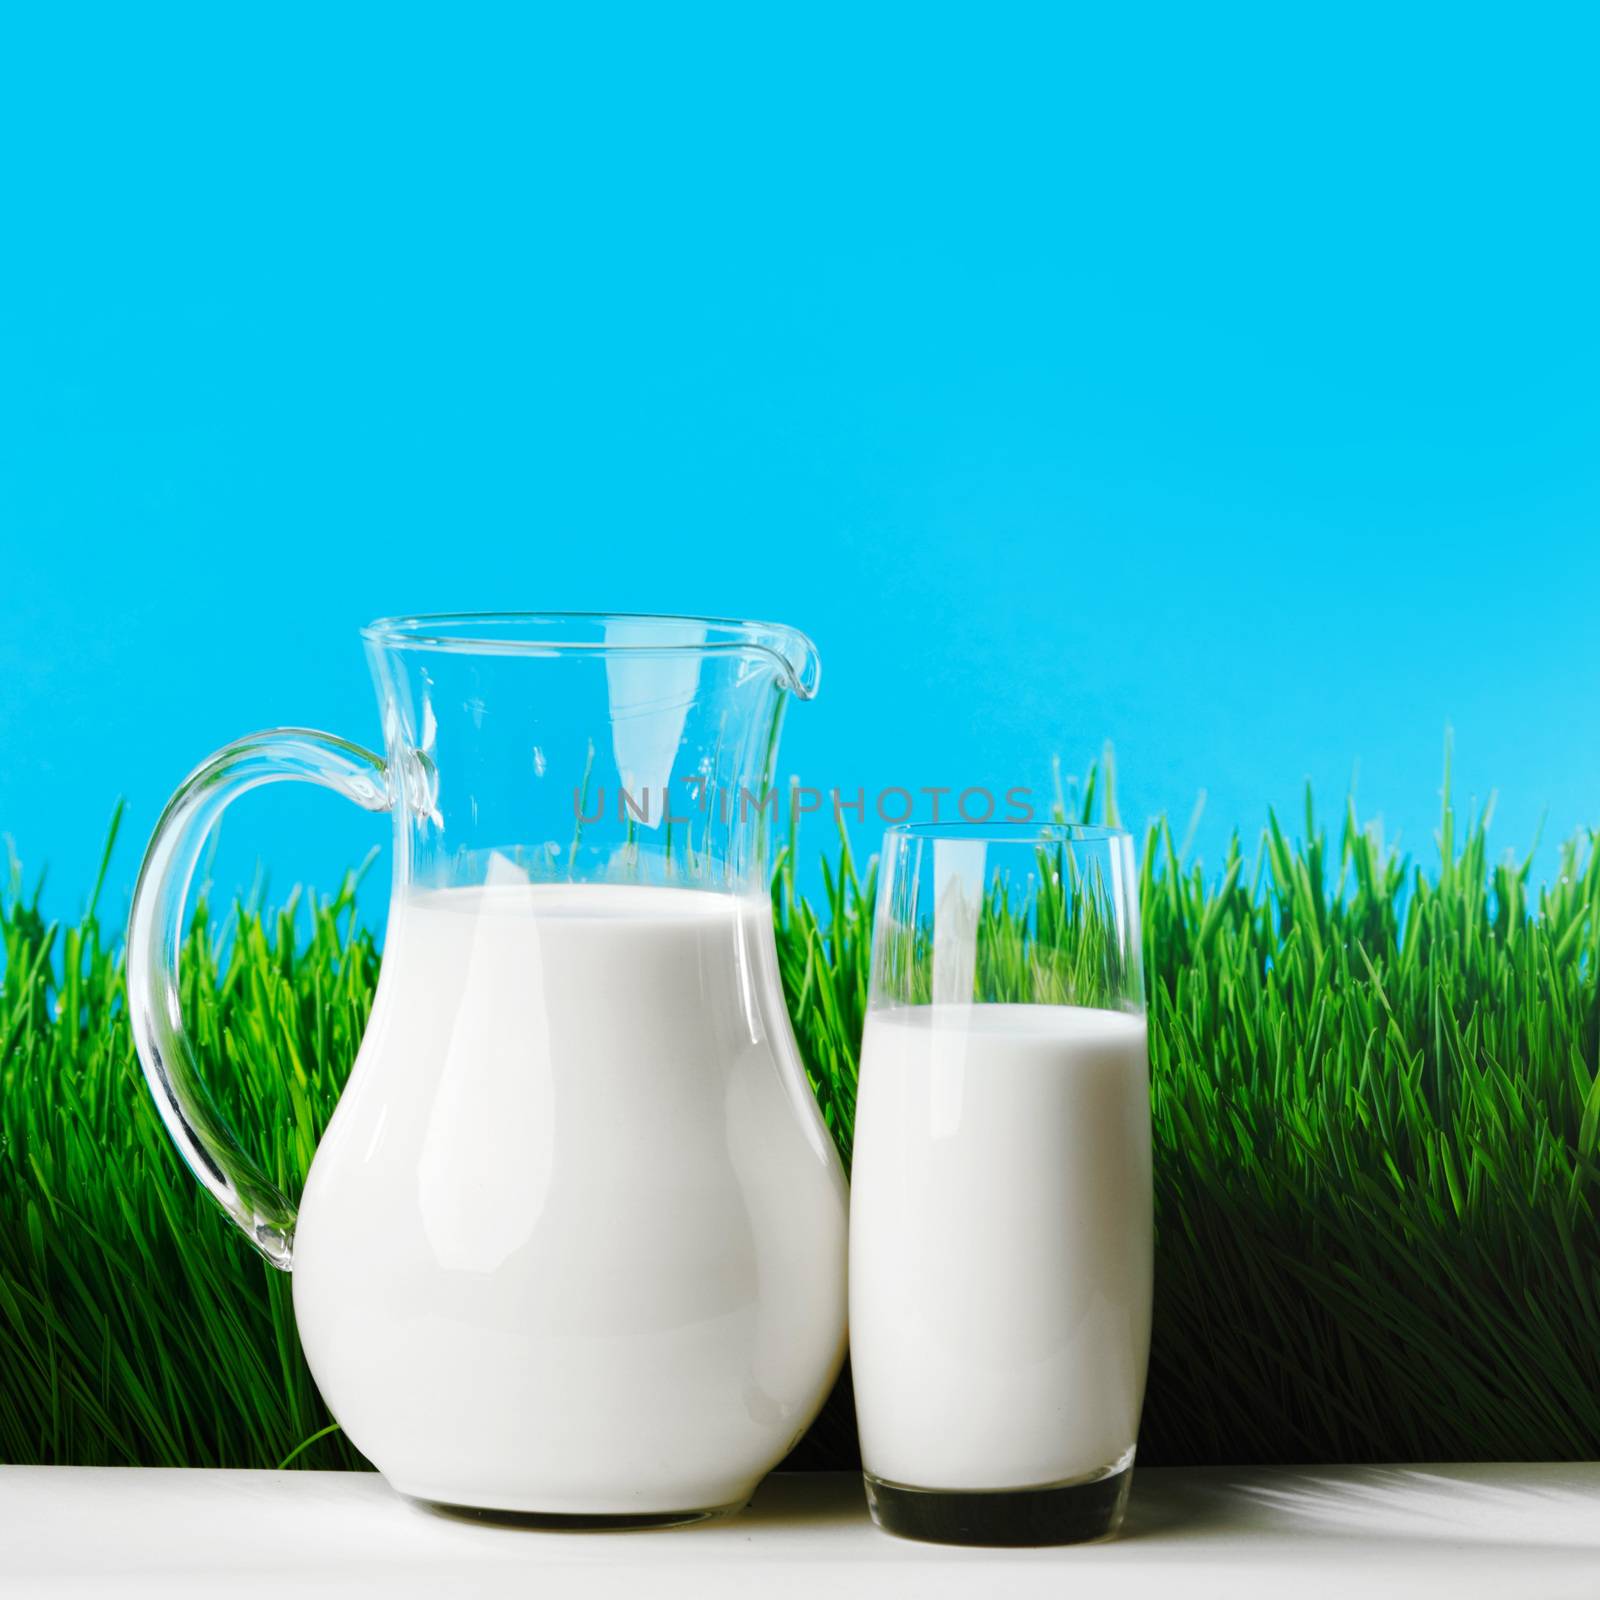 Milk jug and glass on fresh green grass field background